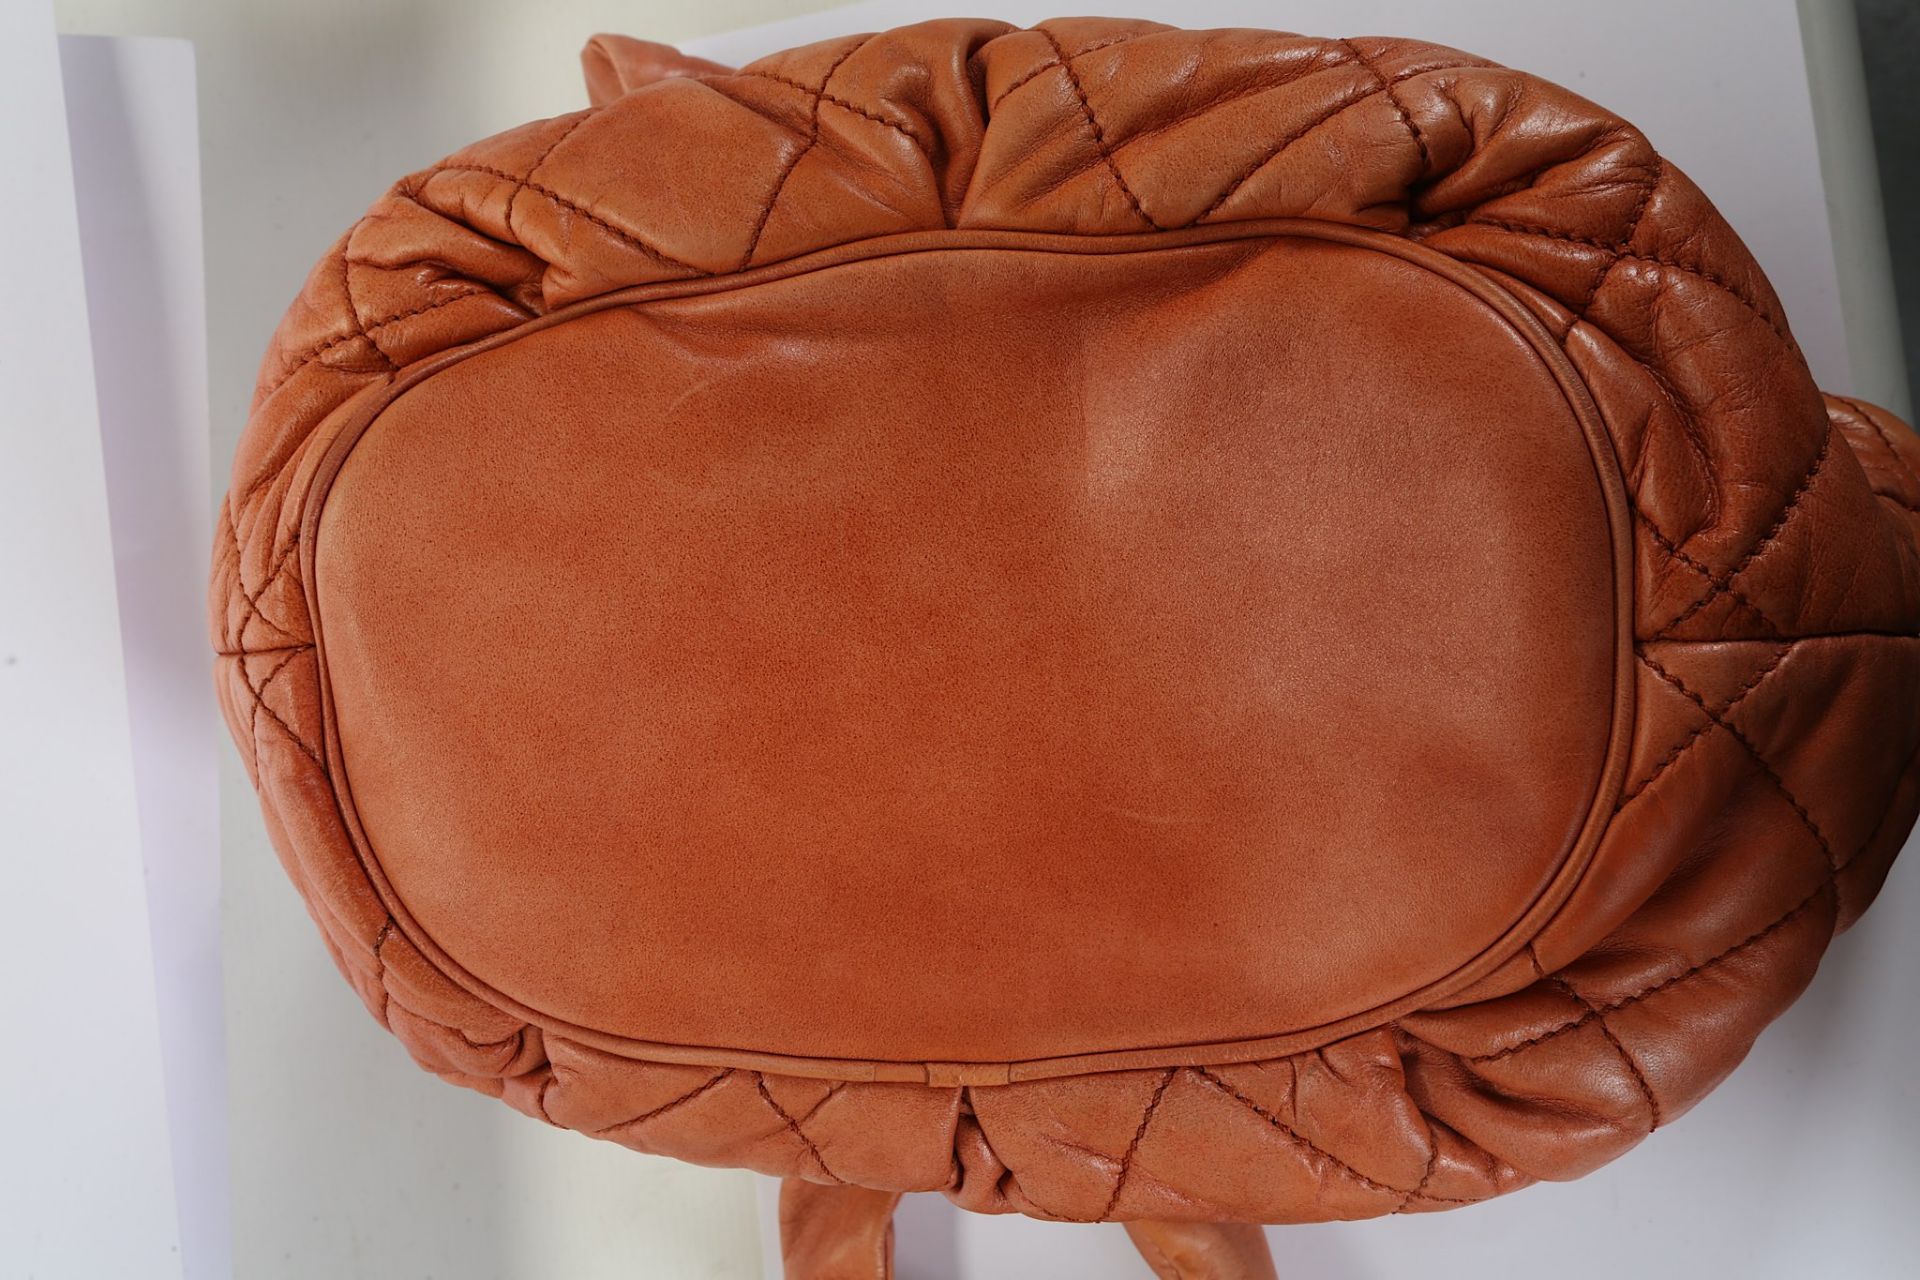 Chanel Coral Leather Shoulder Bag, c. 2005-06, puf - Image 7 of 7